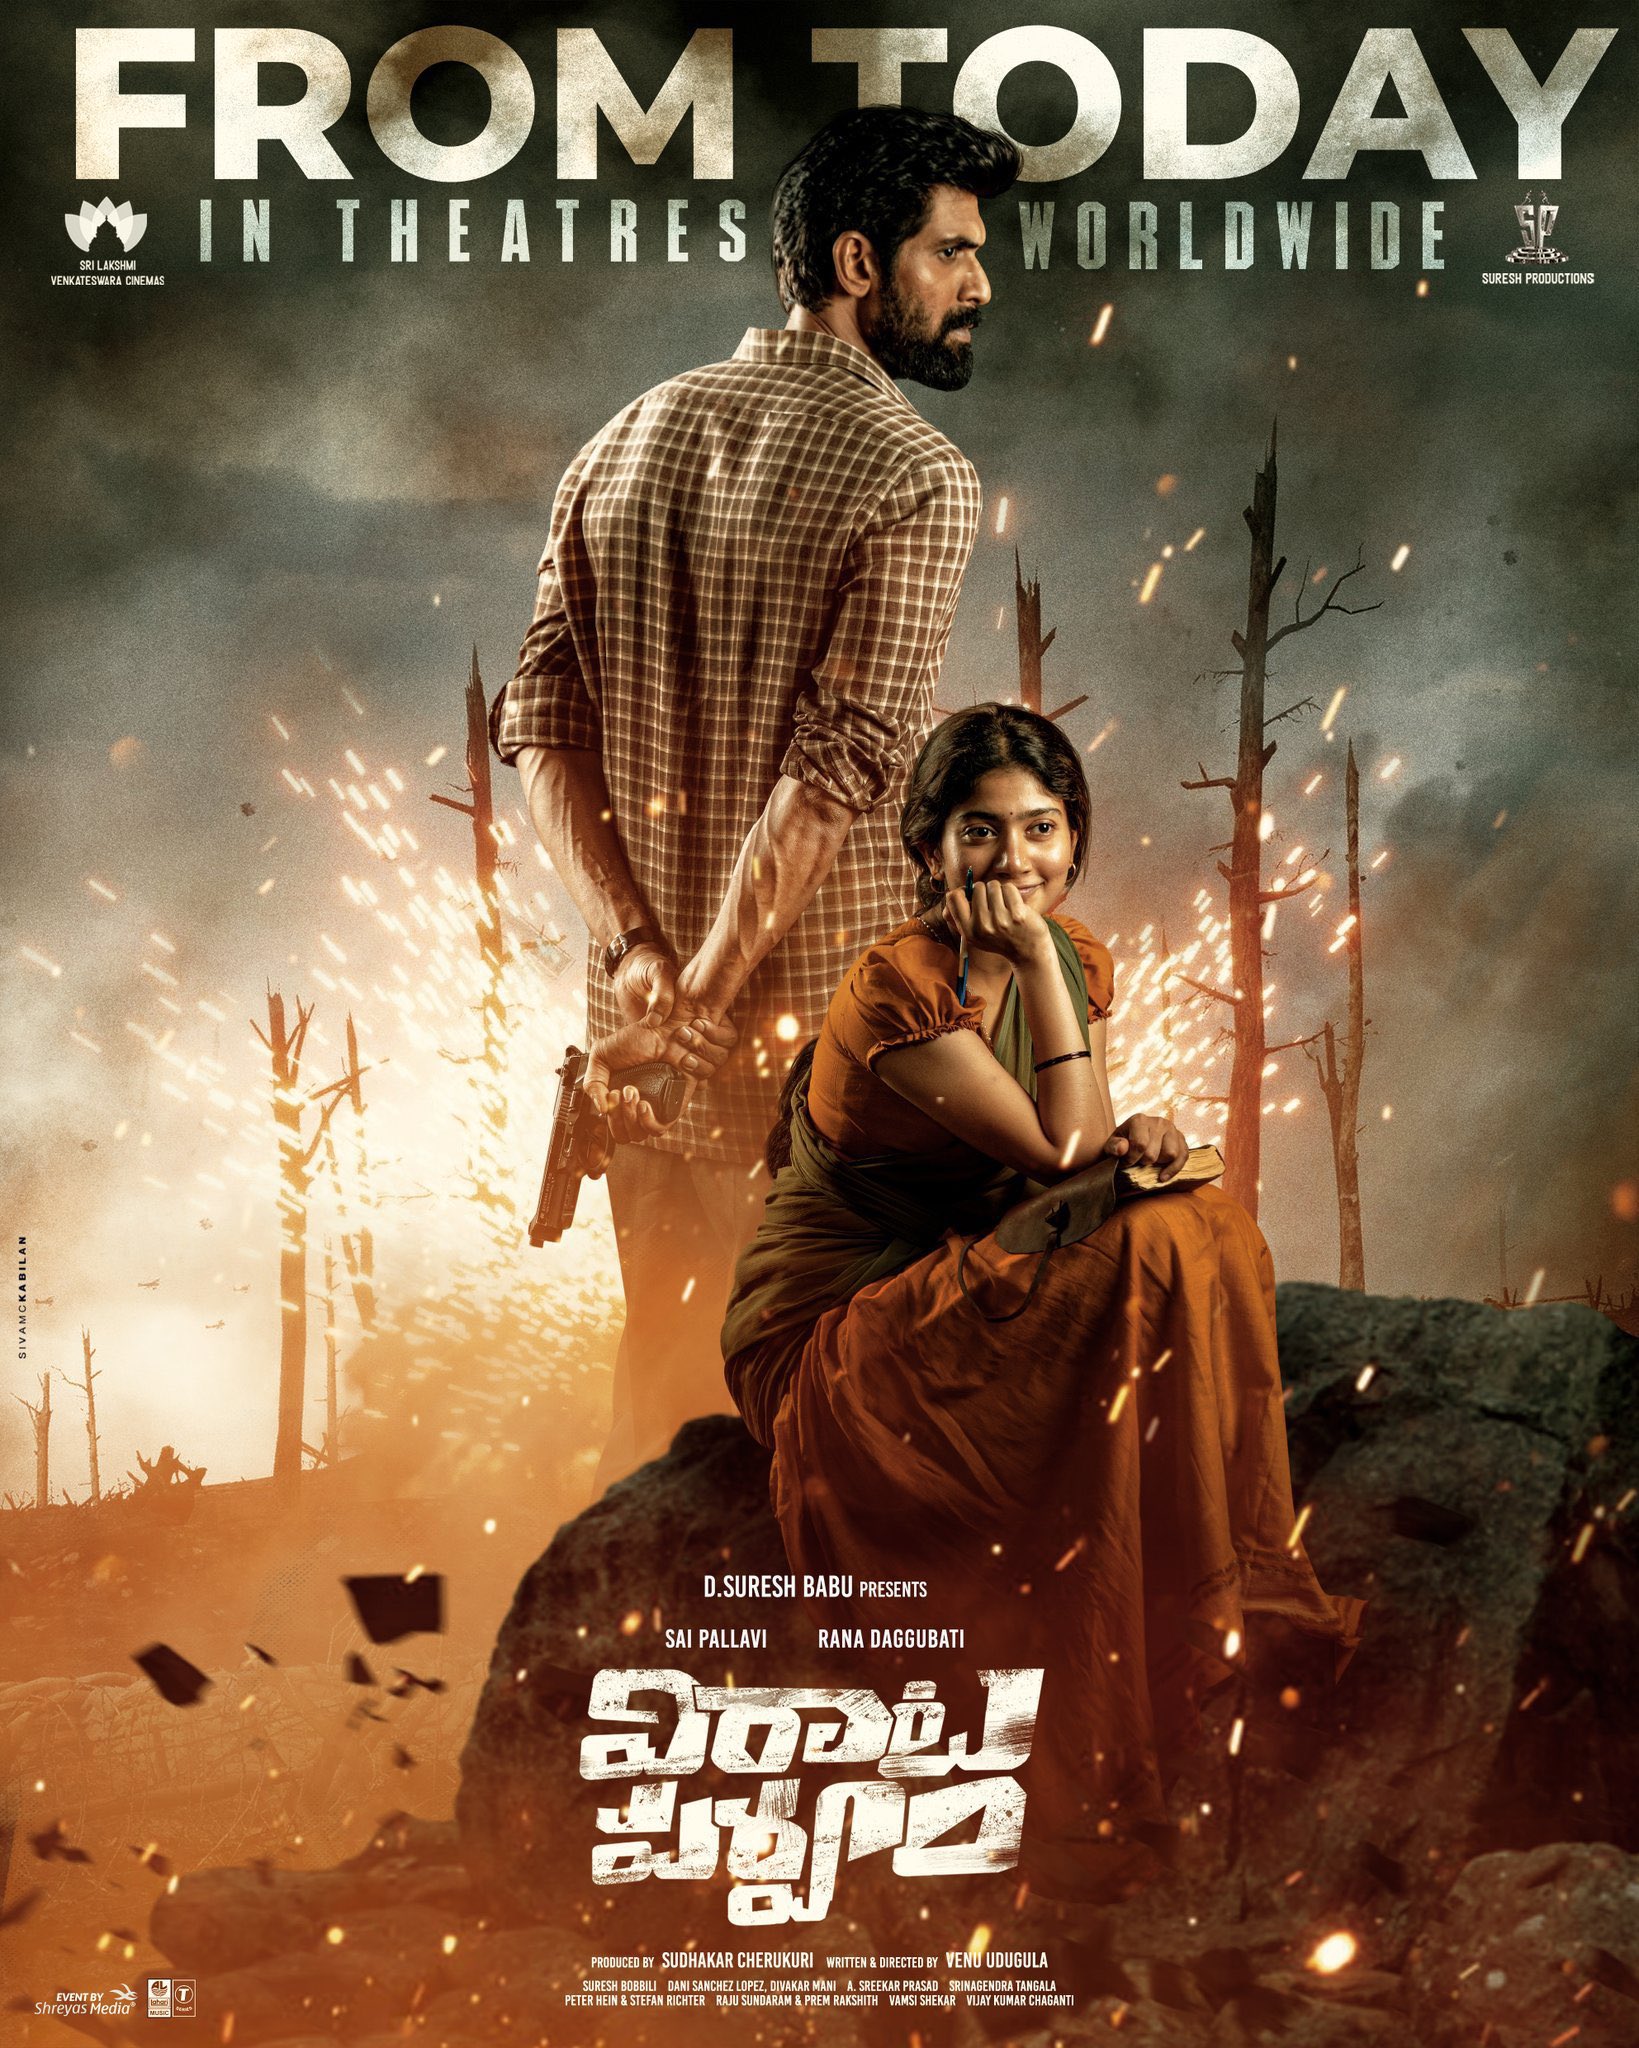 Virata Parvam (2022) is tamil action drama film directed by Venu Udugula